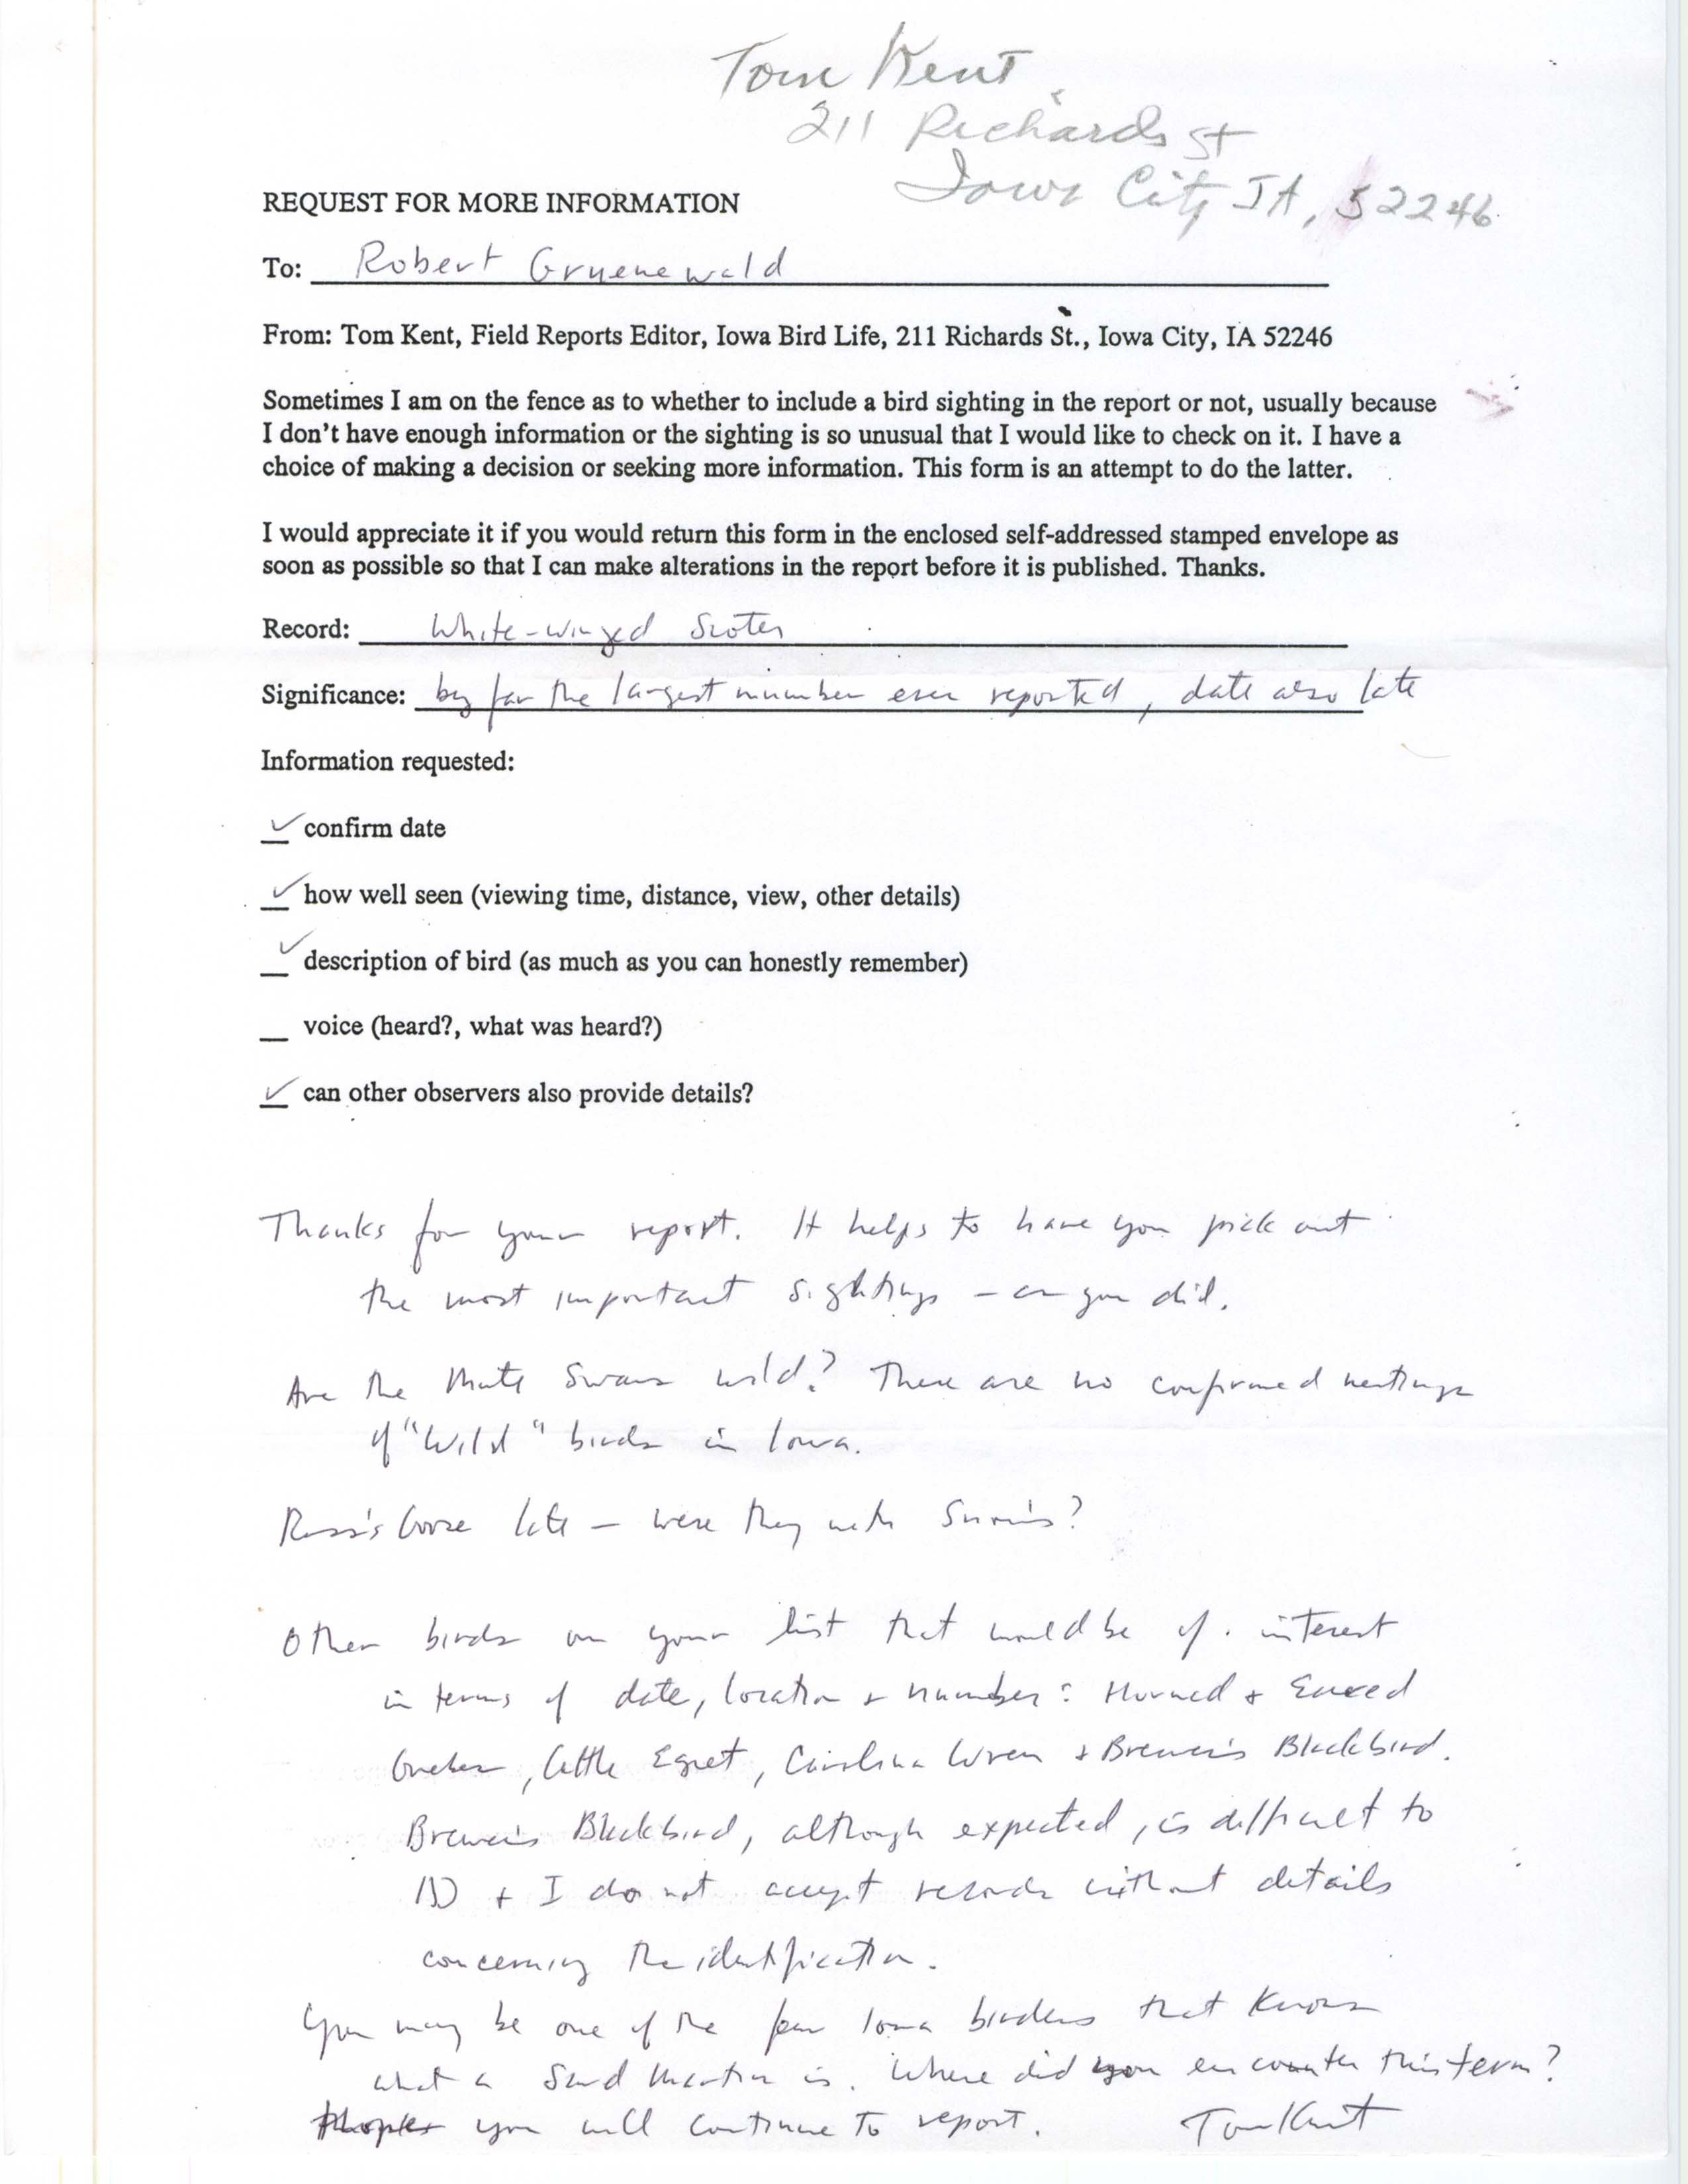 Thomas Kent letter to Robert Gruenewald regarding request for more information, spring 1998